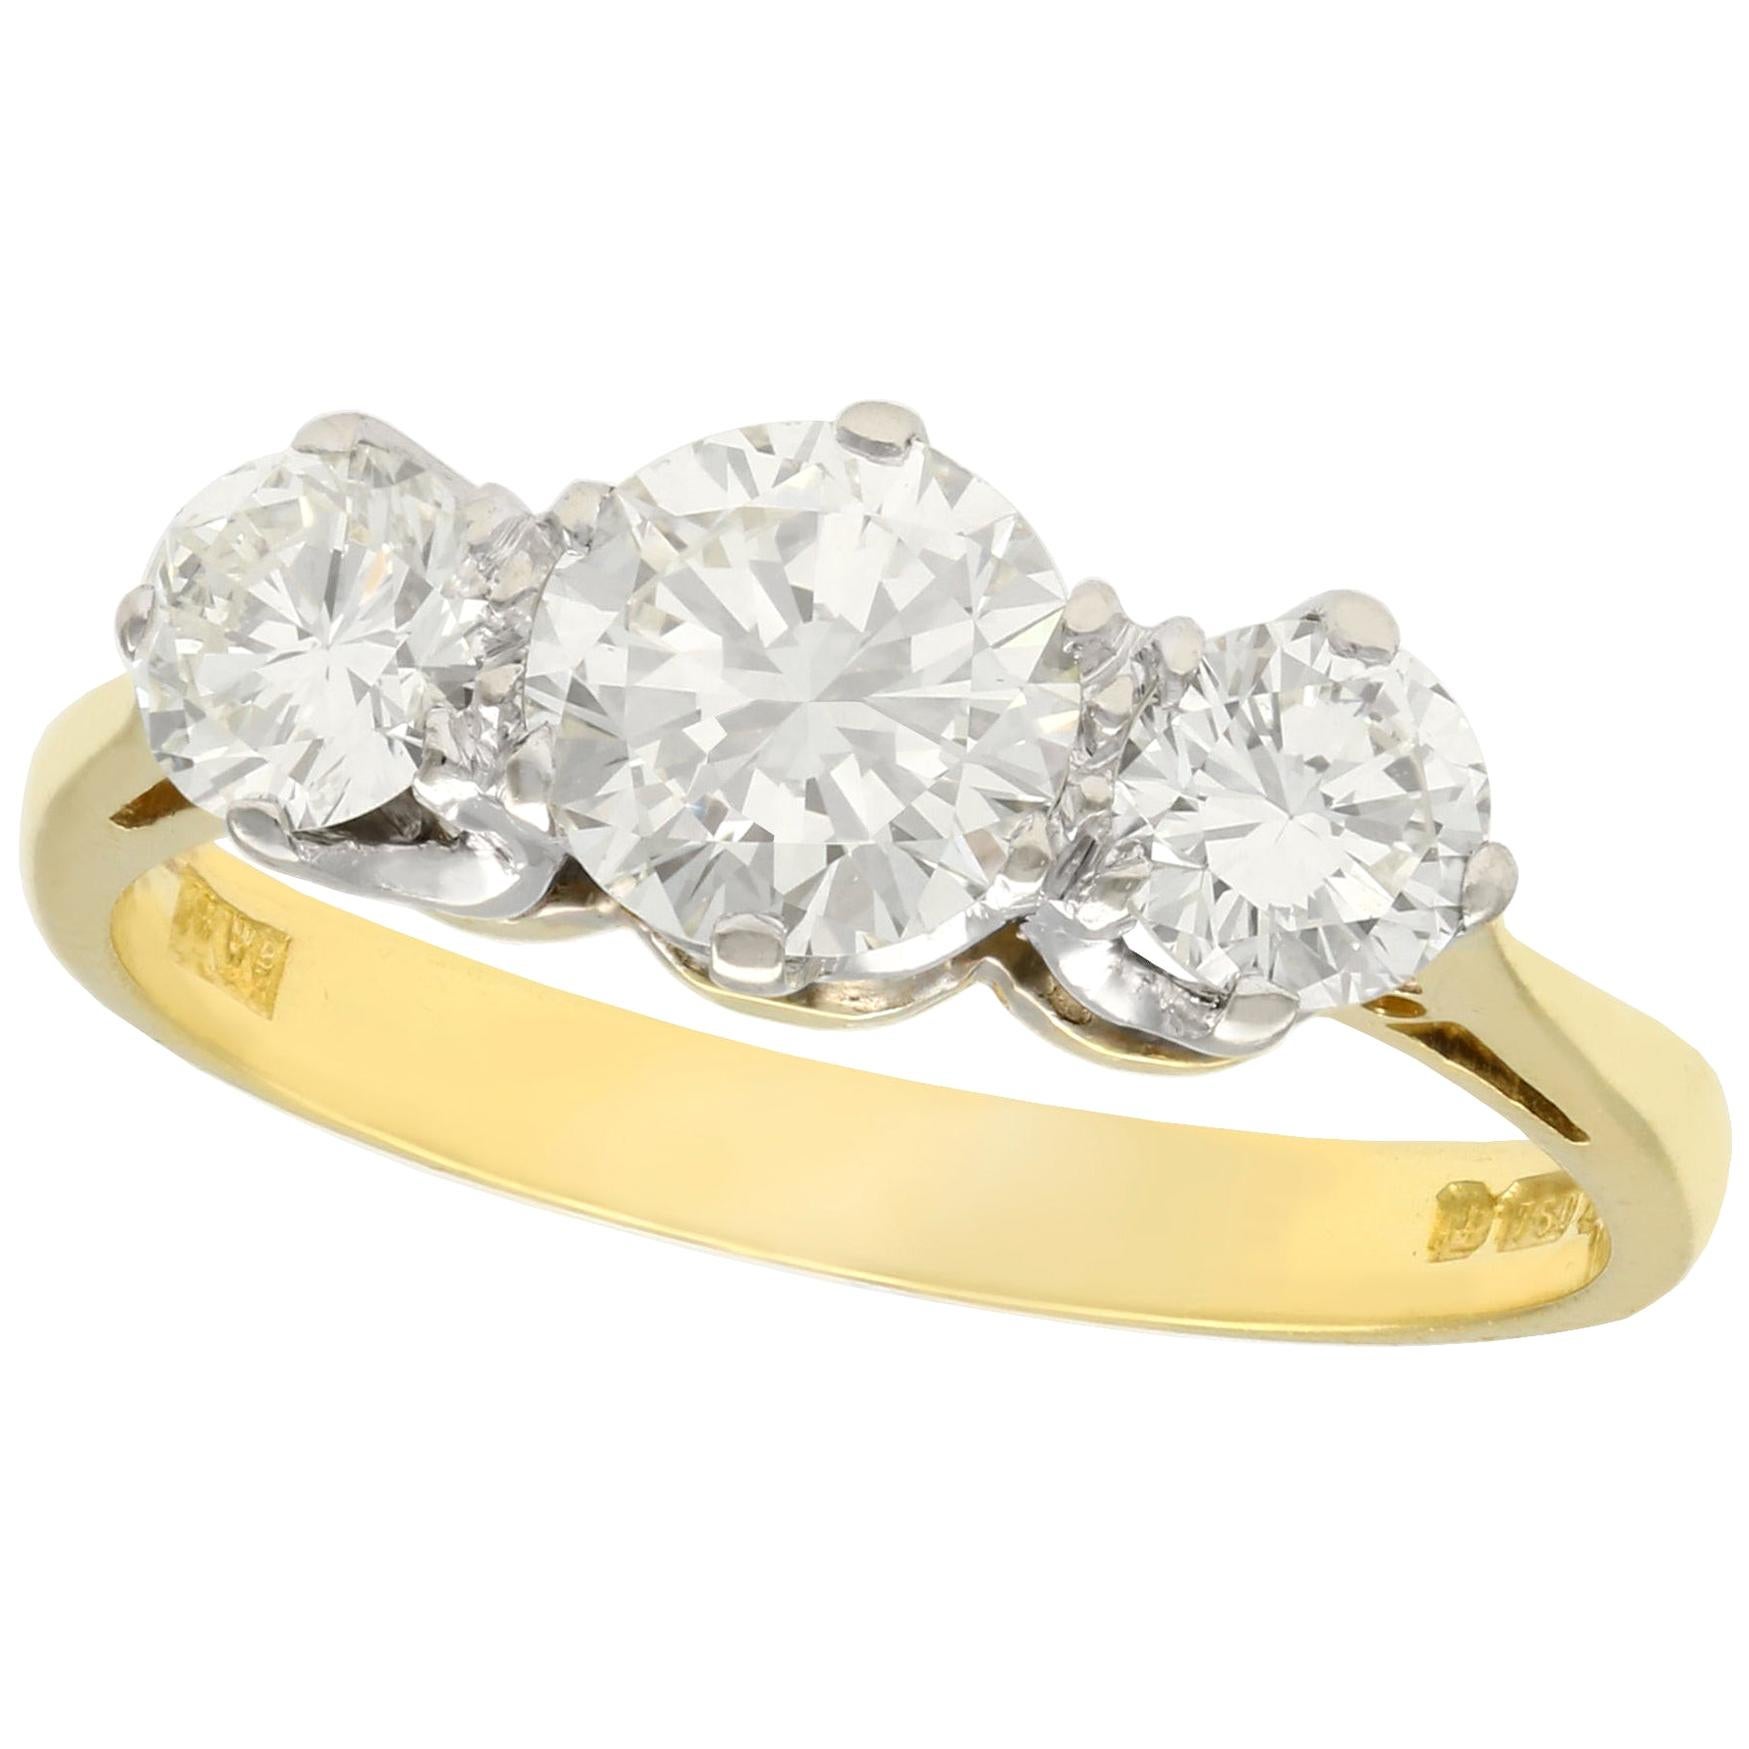 1.45 Carat Diamond and Yellow Gold Trilogy Ring